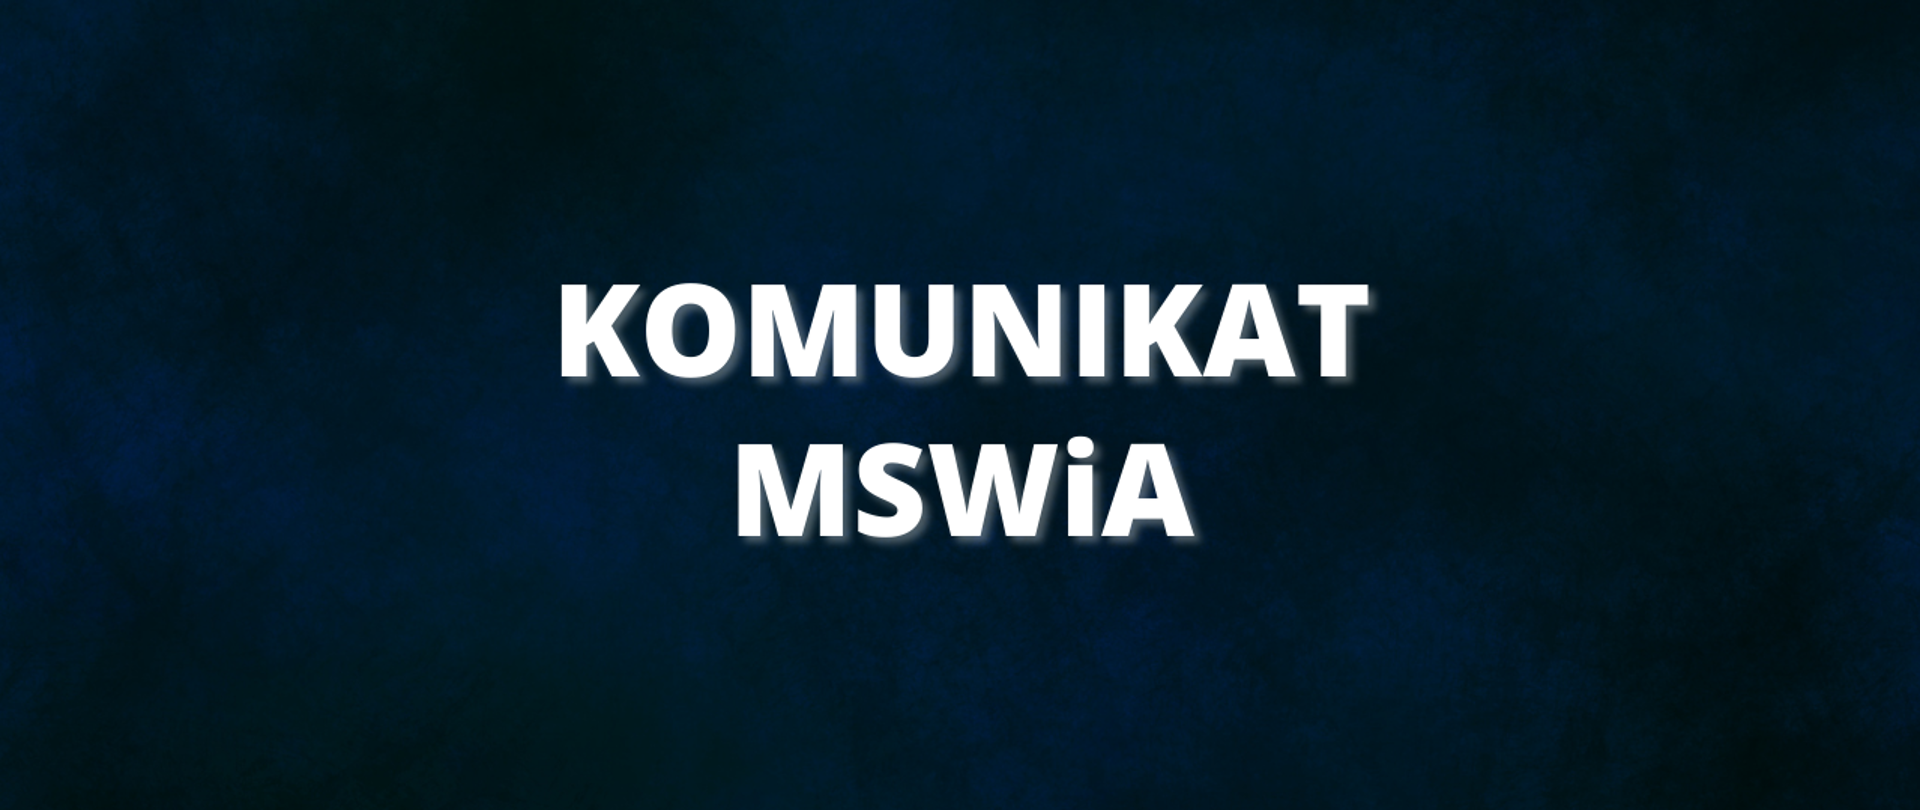 Napis na granatowym tle: Komunikat MSWiA.